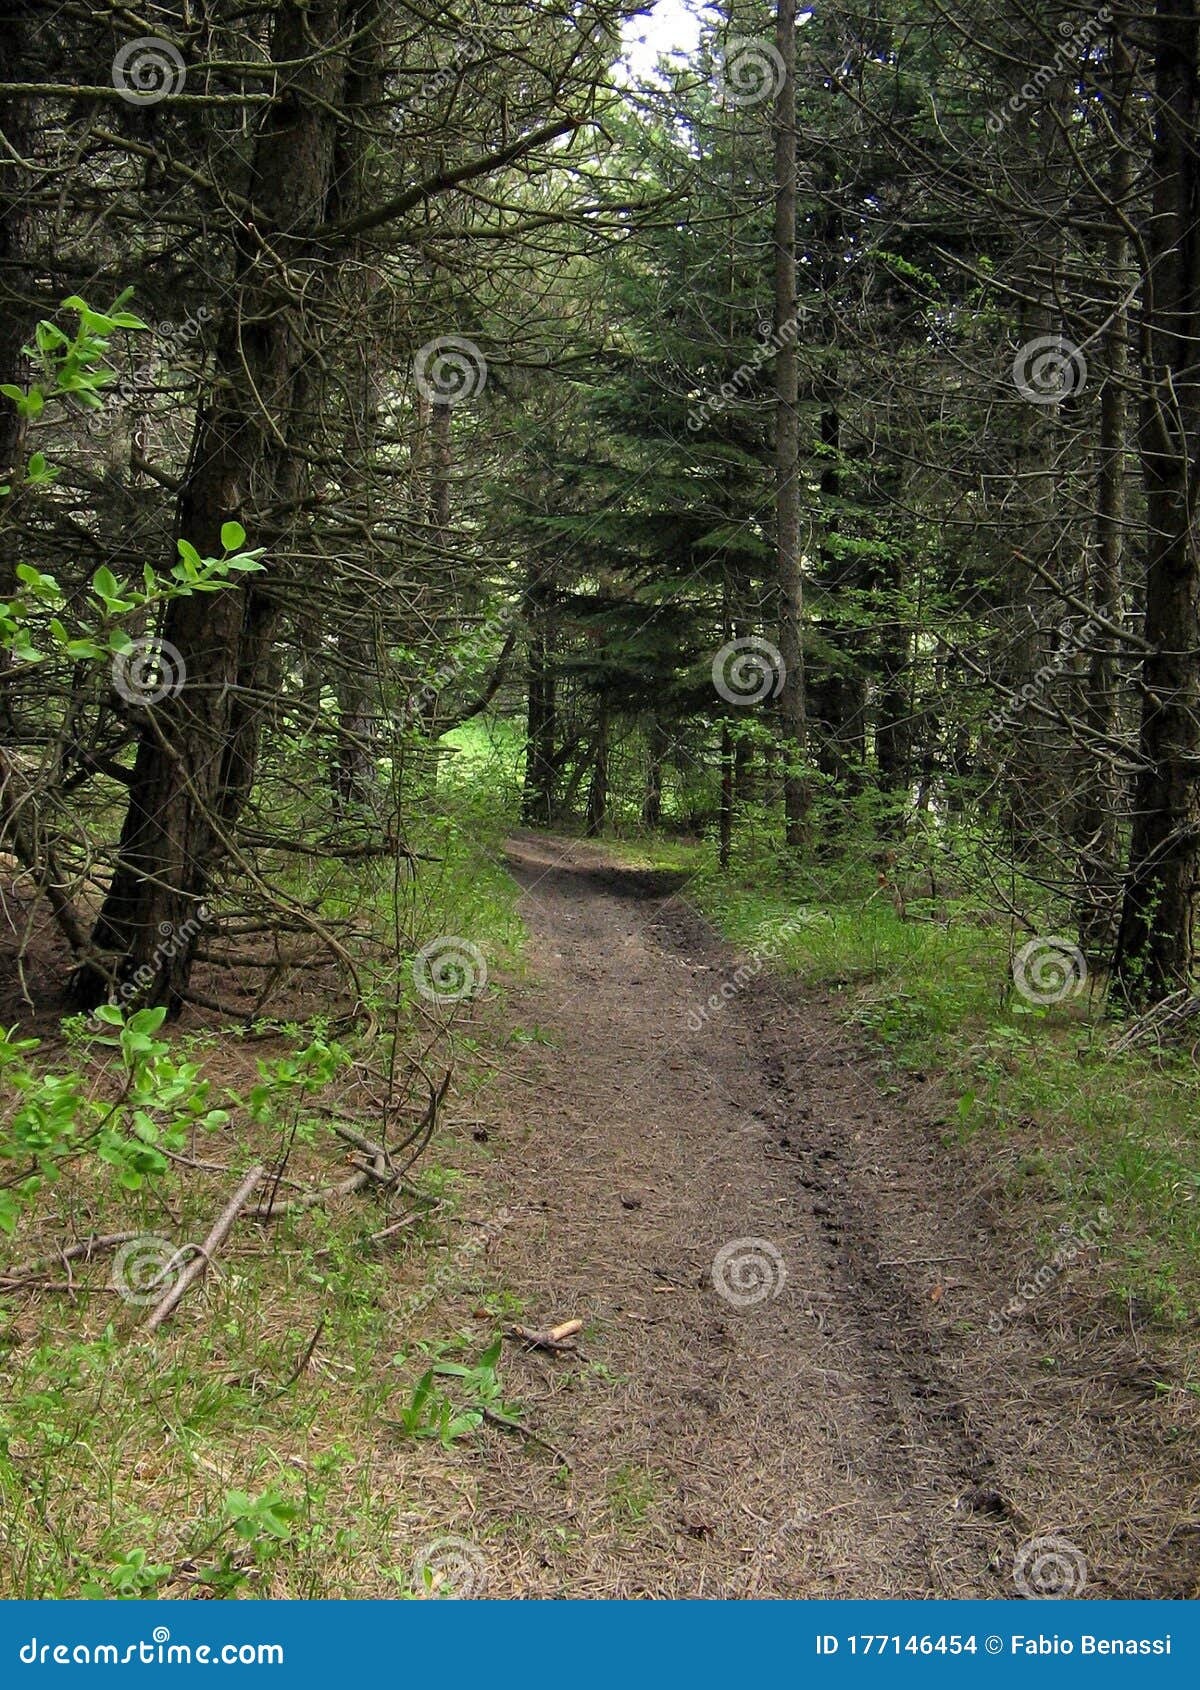 cozzano pineta, provincia di parma,italy, path in the pine and fir forest